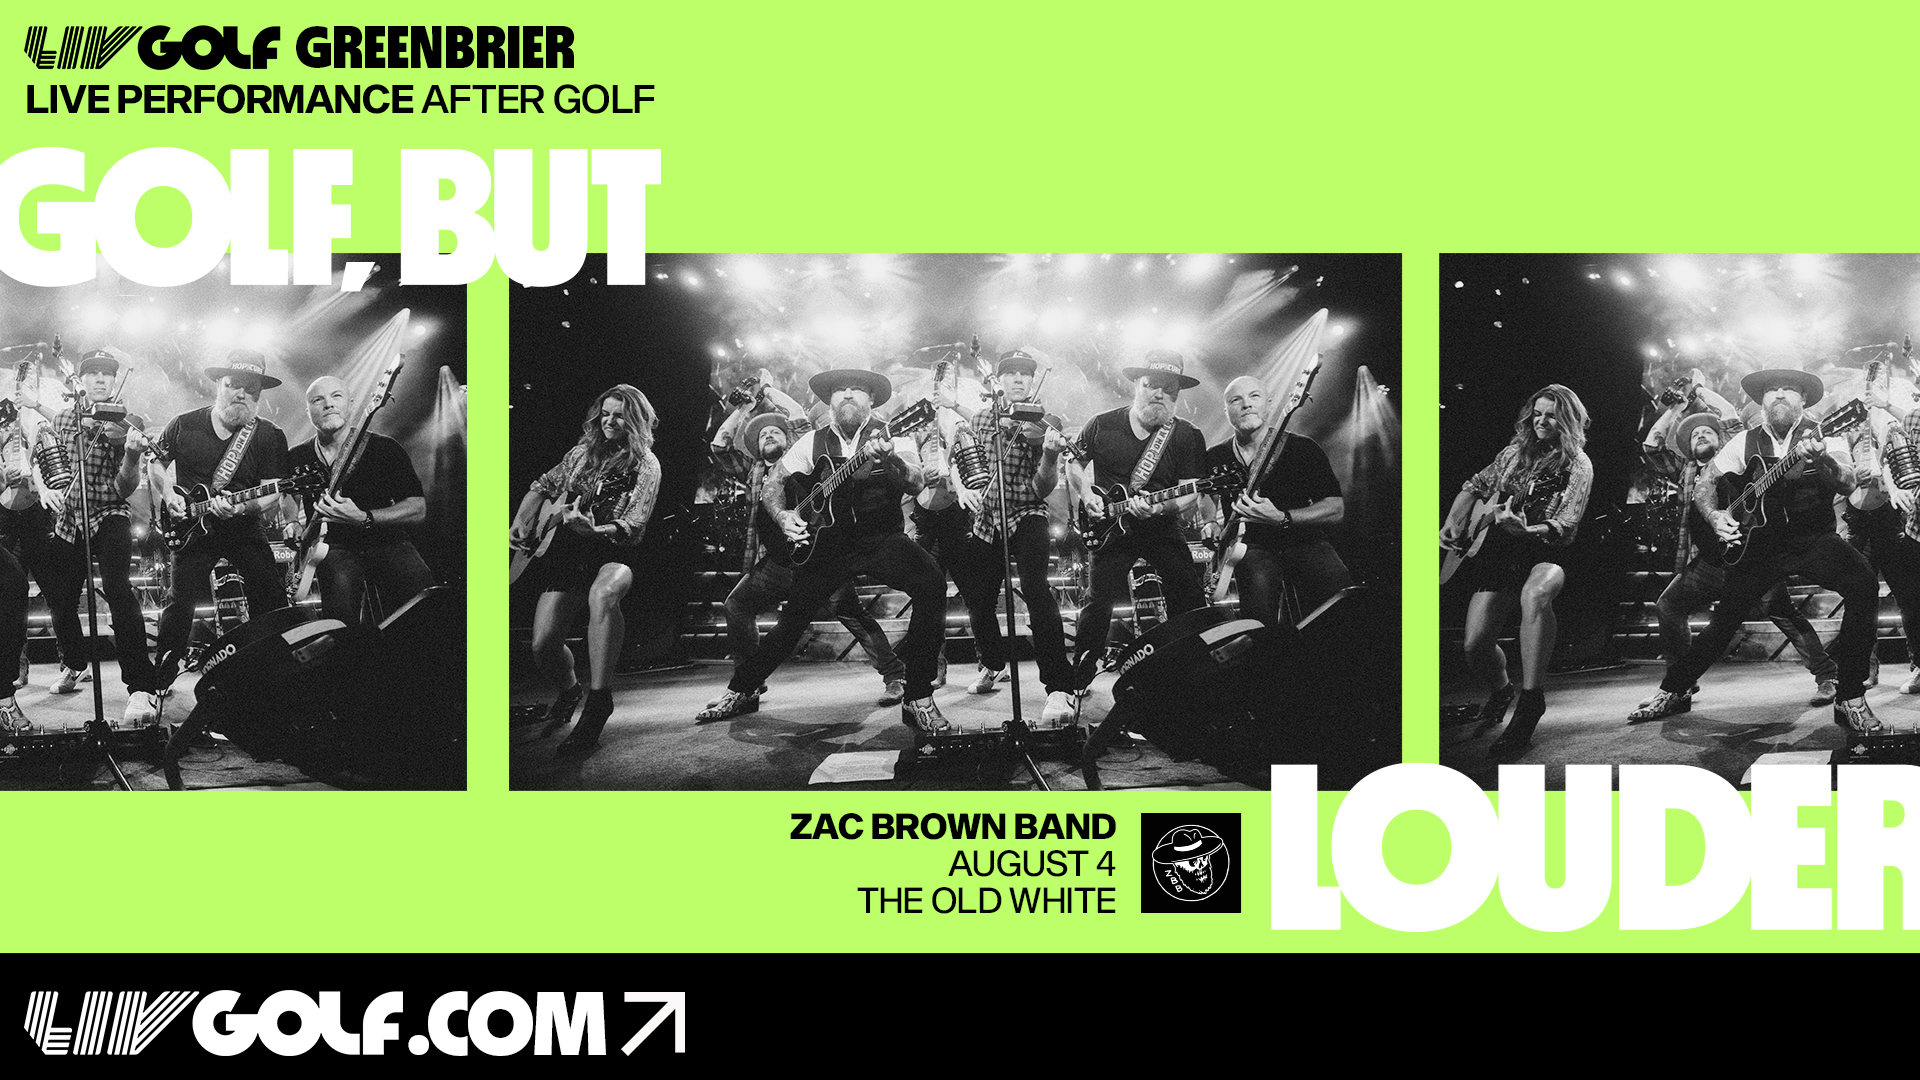 Zac Brown Band to perform live at LIV Golf Greenbrier LIV Golf